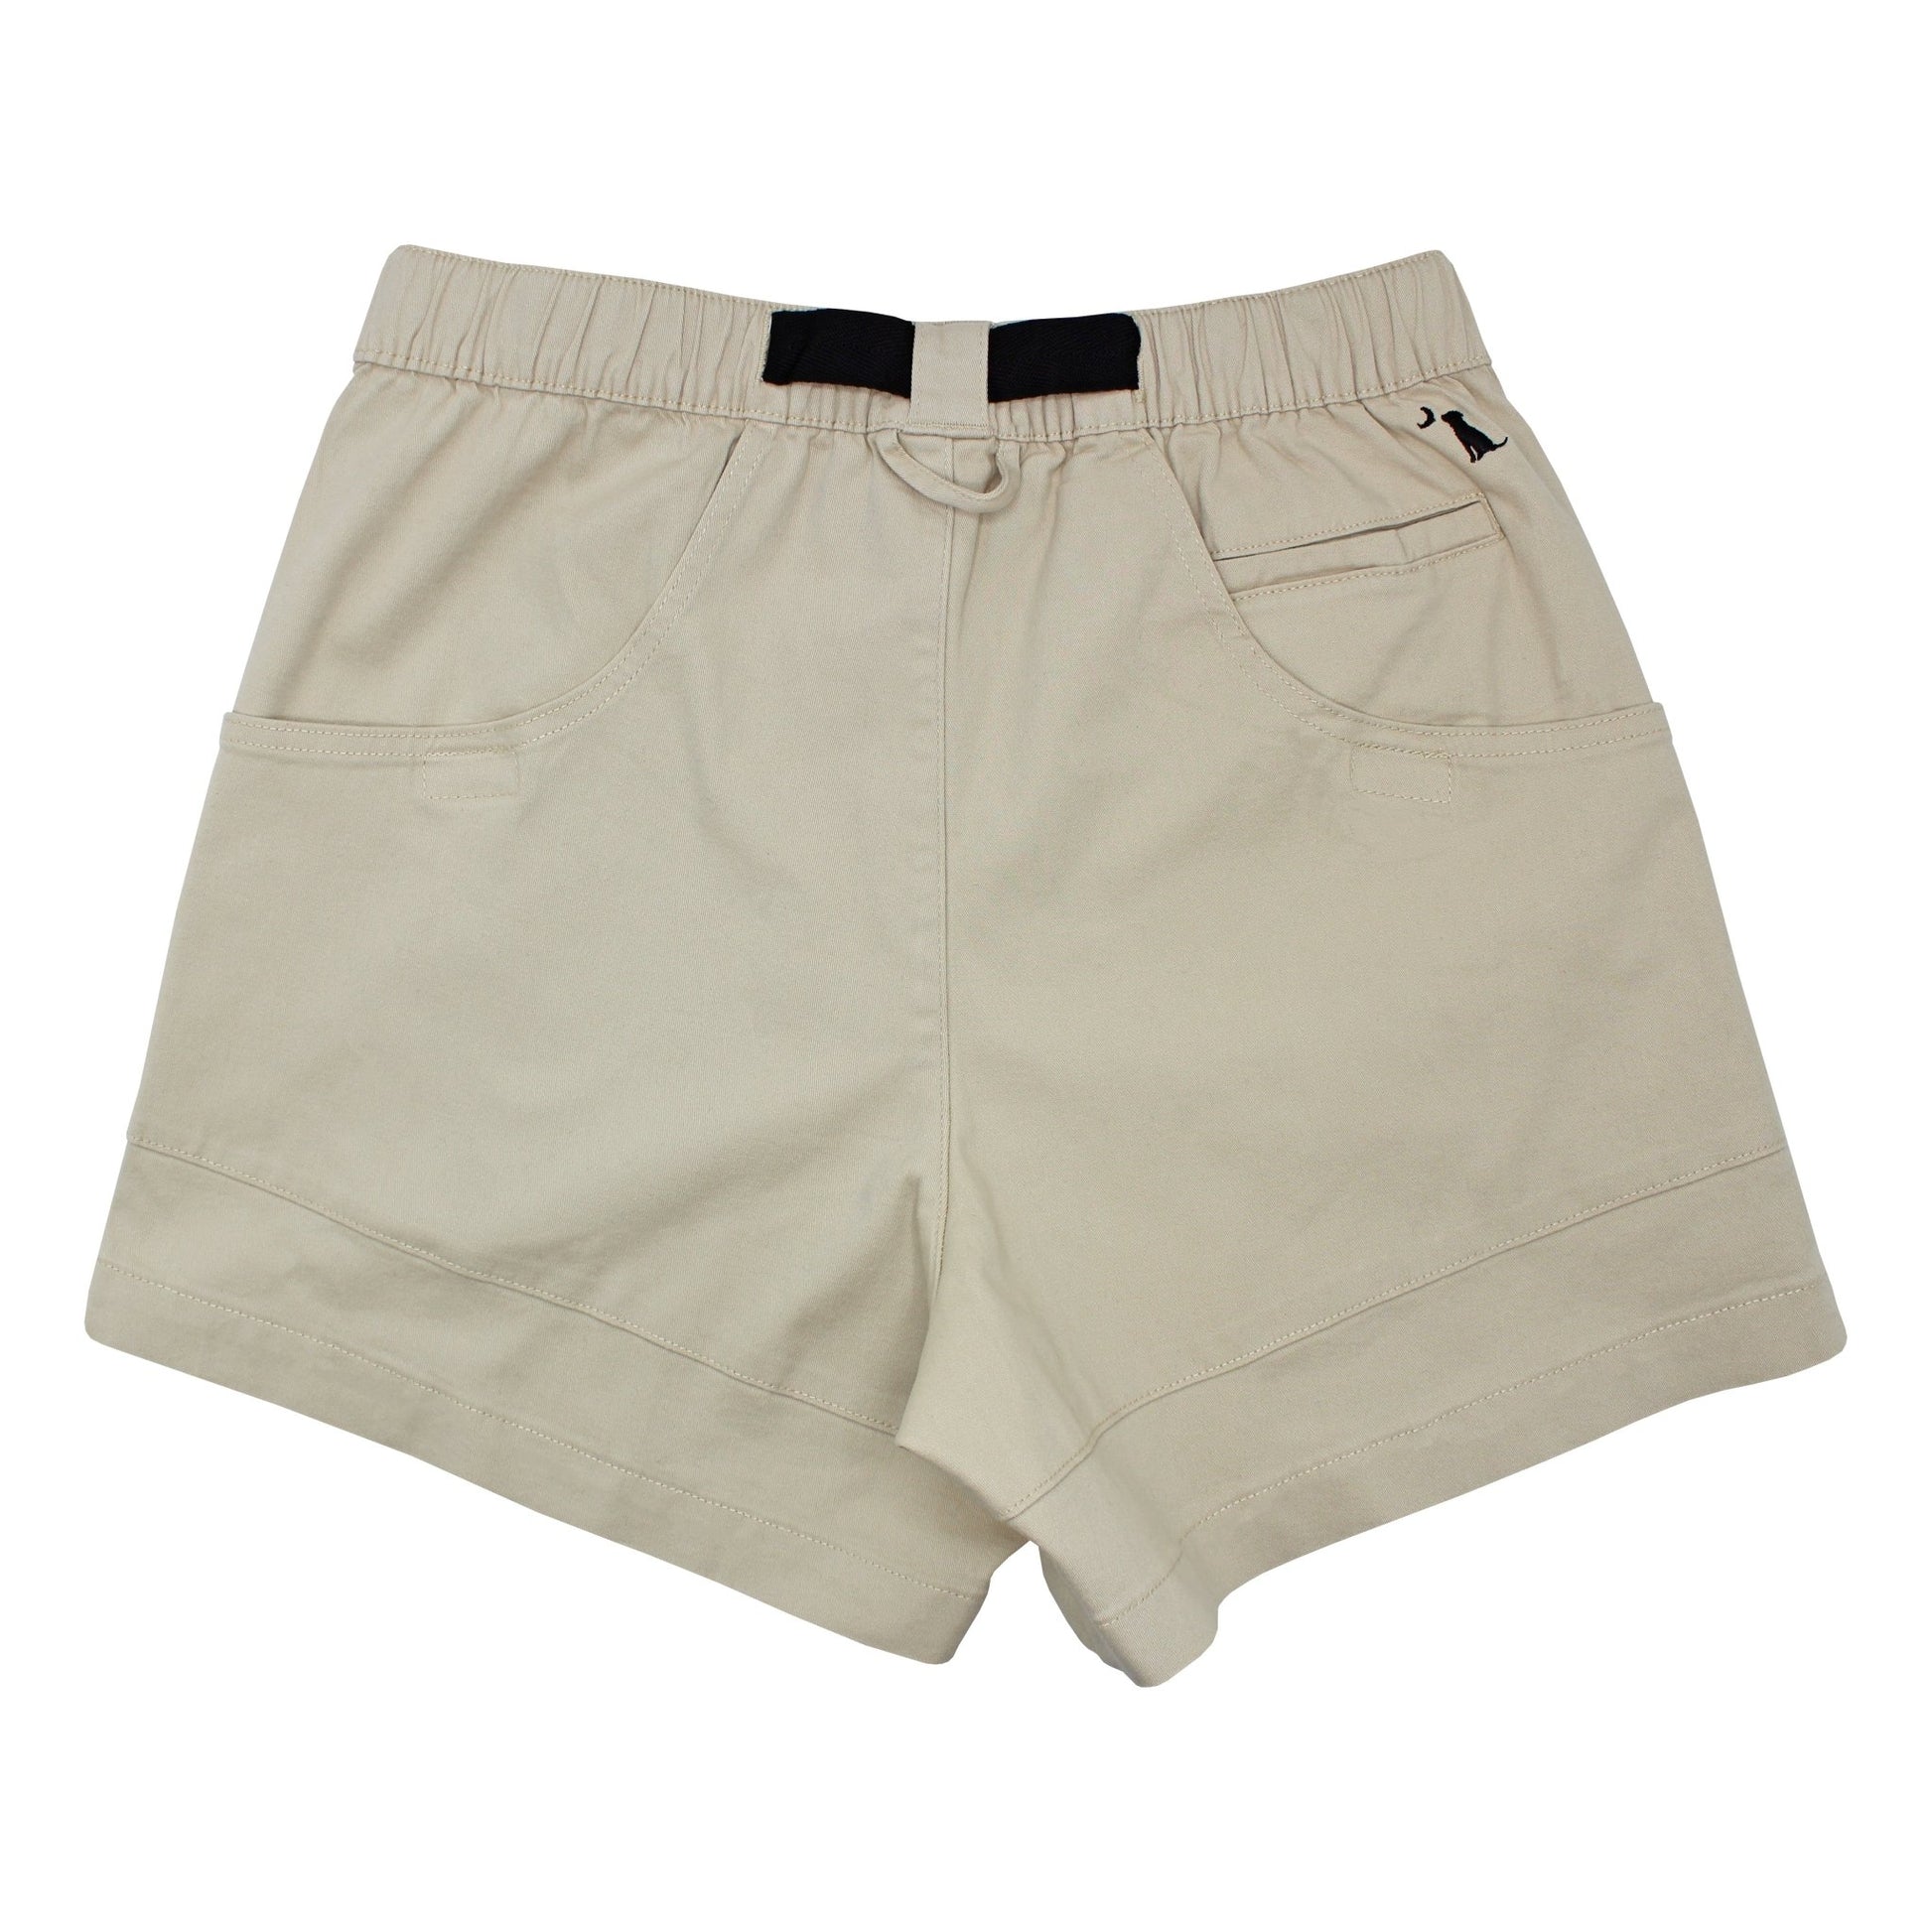 Dock Shorts- Khaki - Mercantile213